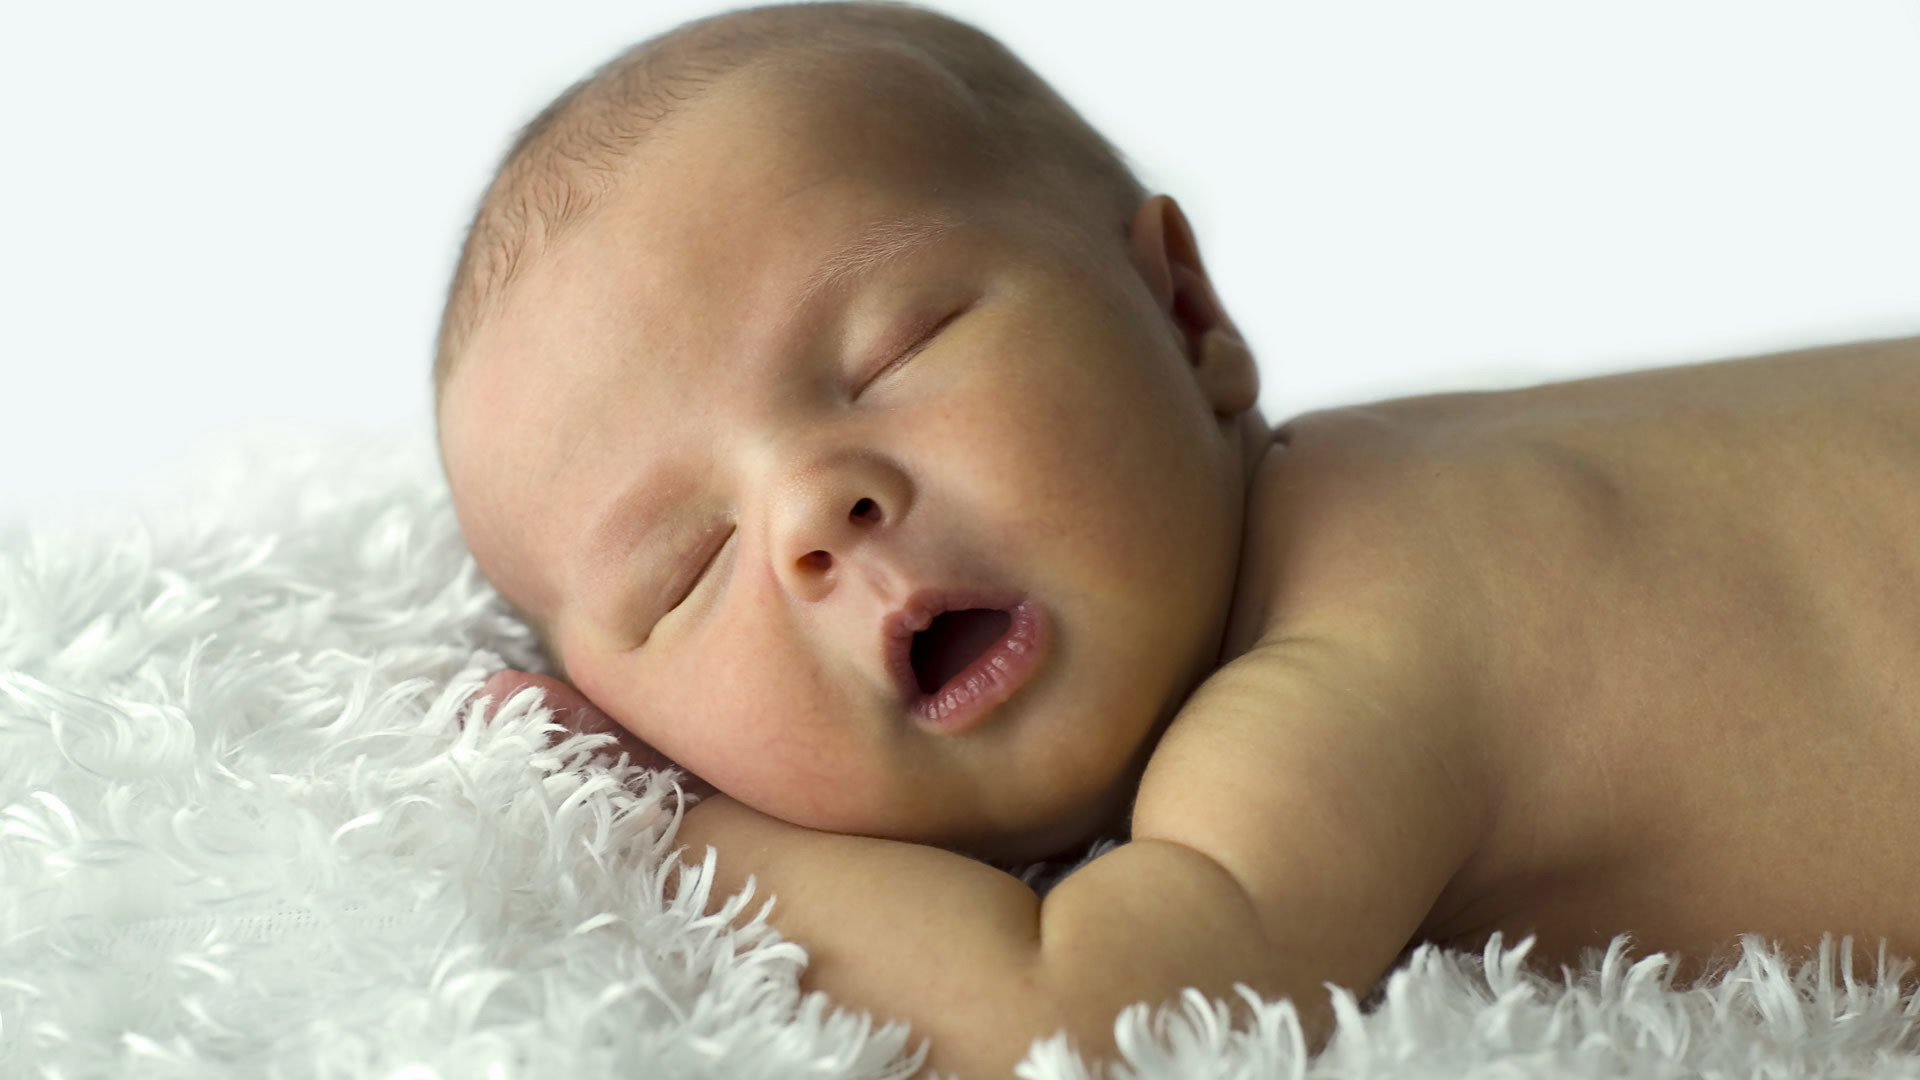 1920x1080 hd pics photos baby cute sleeping newborn desktop background wallpaper